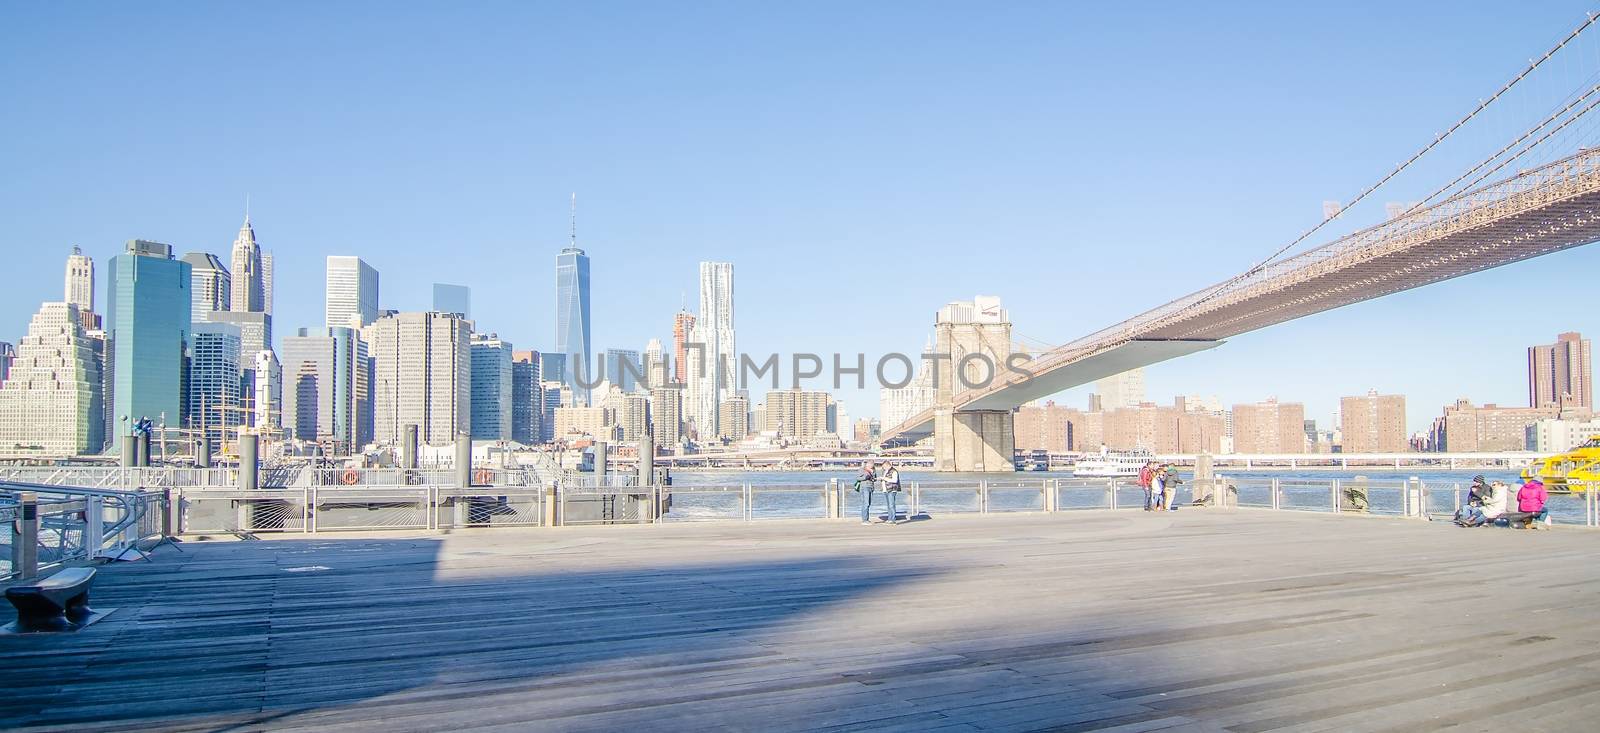 new york city manhattan bridge and skyline by digidreamgrafix